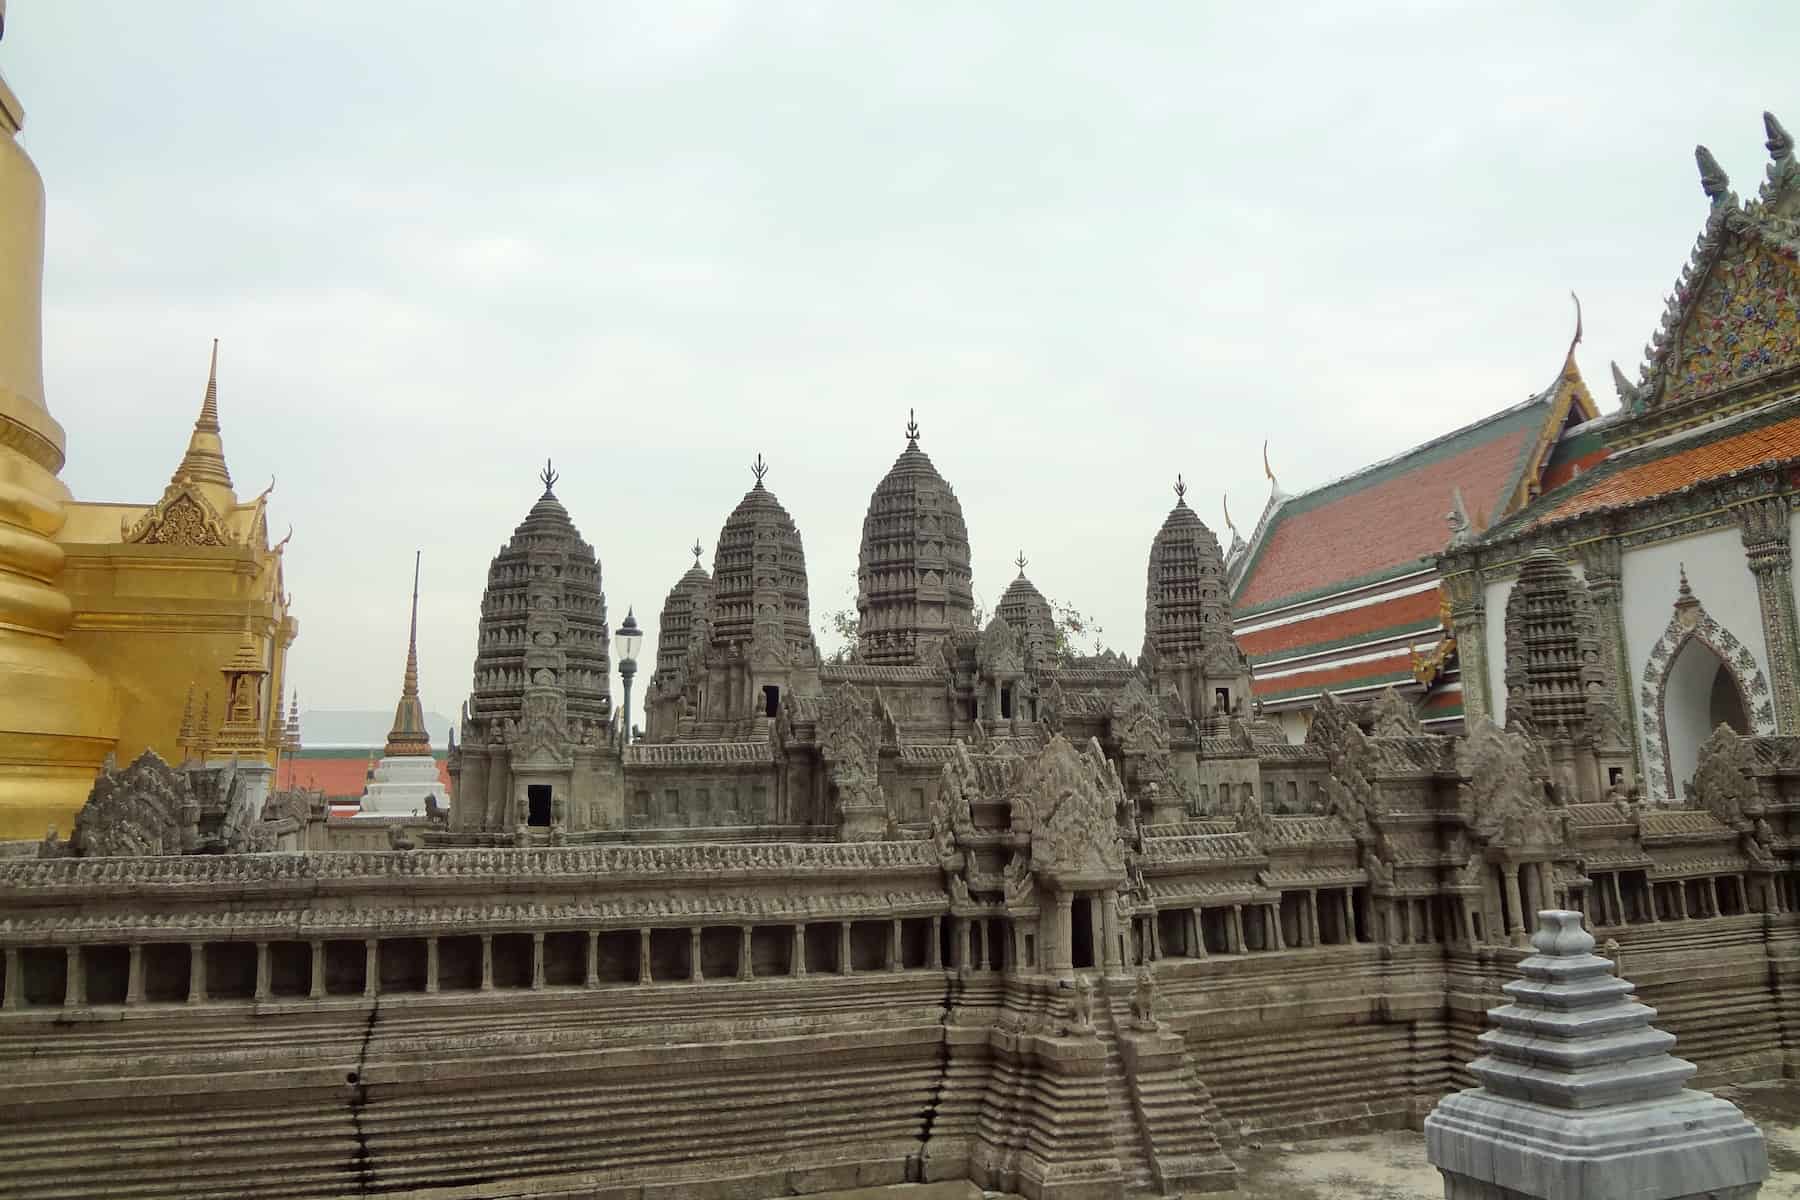 Bangkok’s Mini Angkor Wat: Legacy of the Thai-Khmer Rivalry